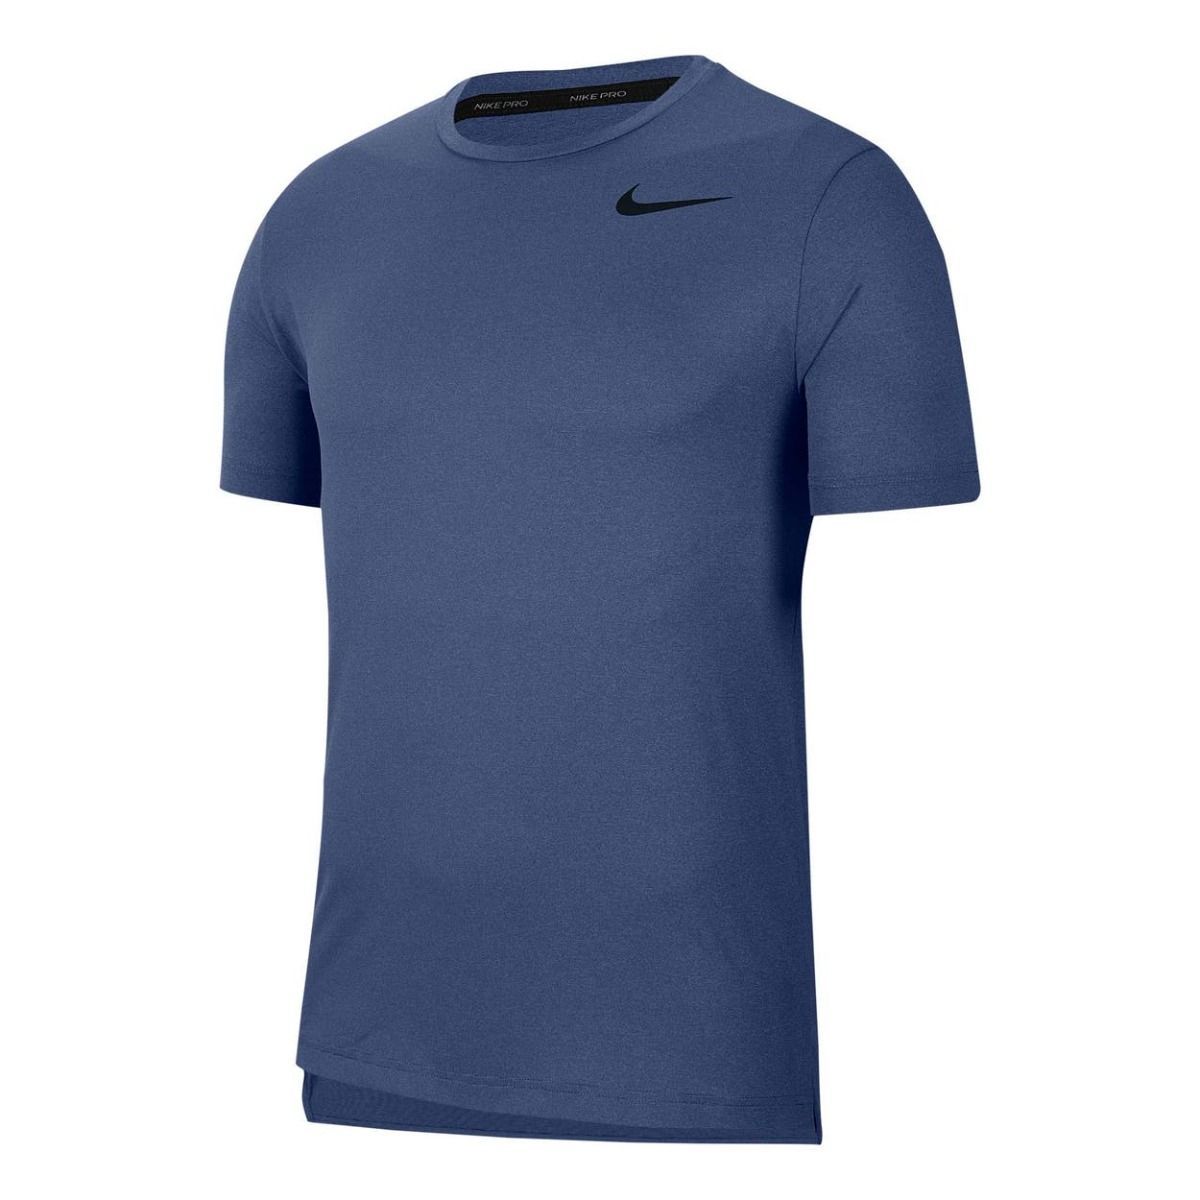 Nike Pro Short Sleeve Top